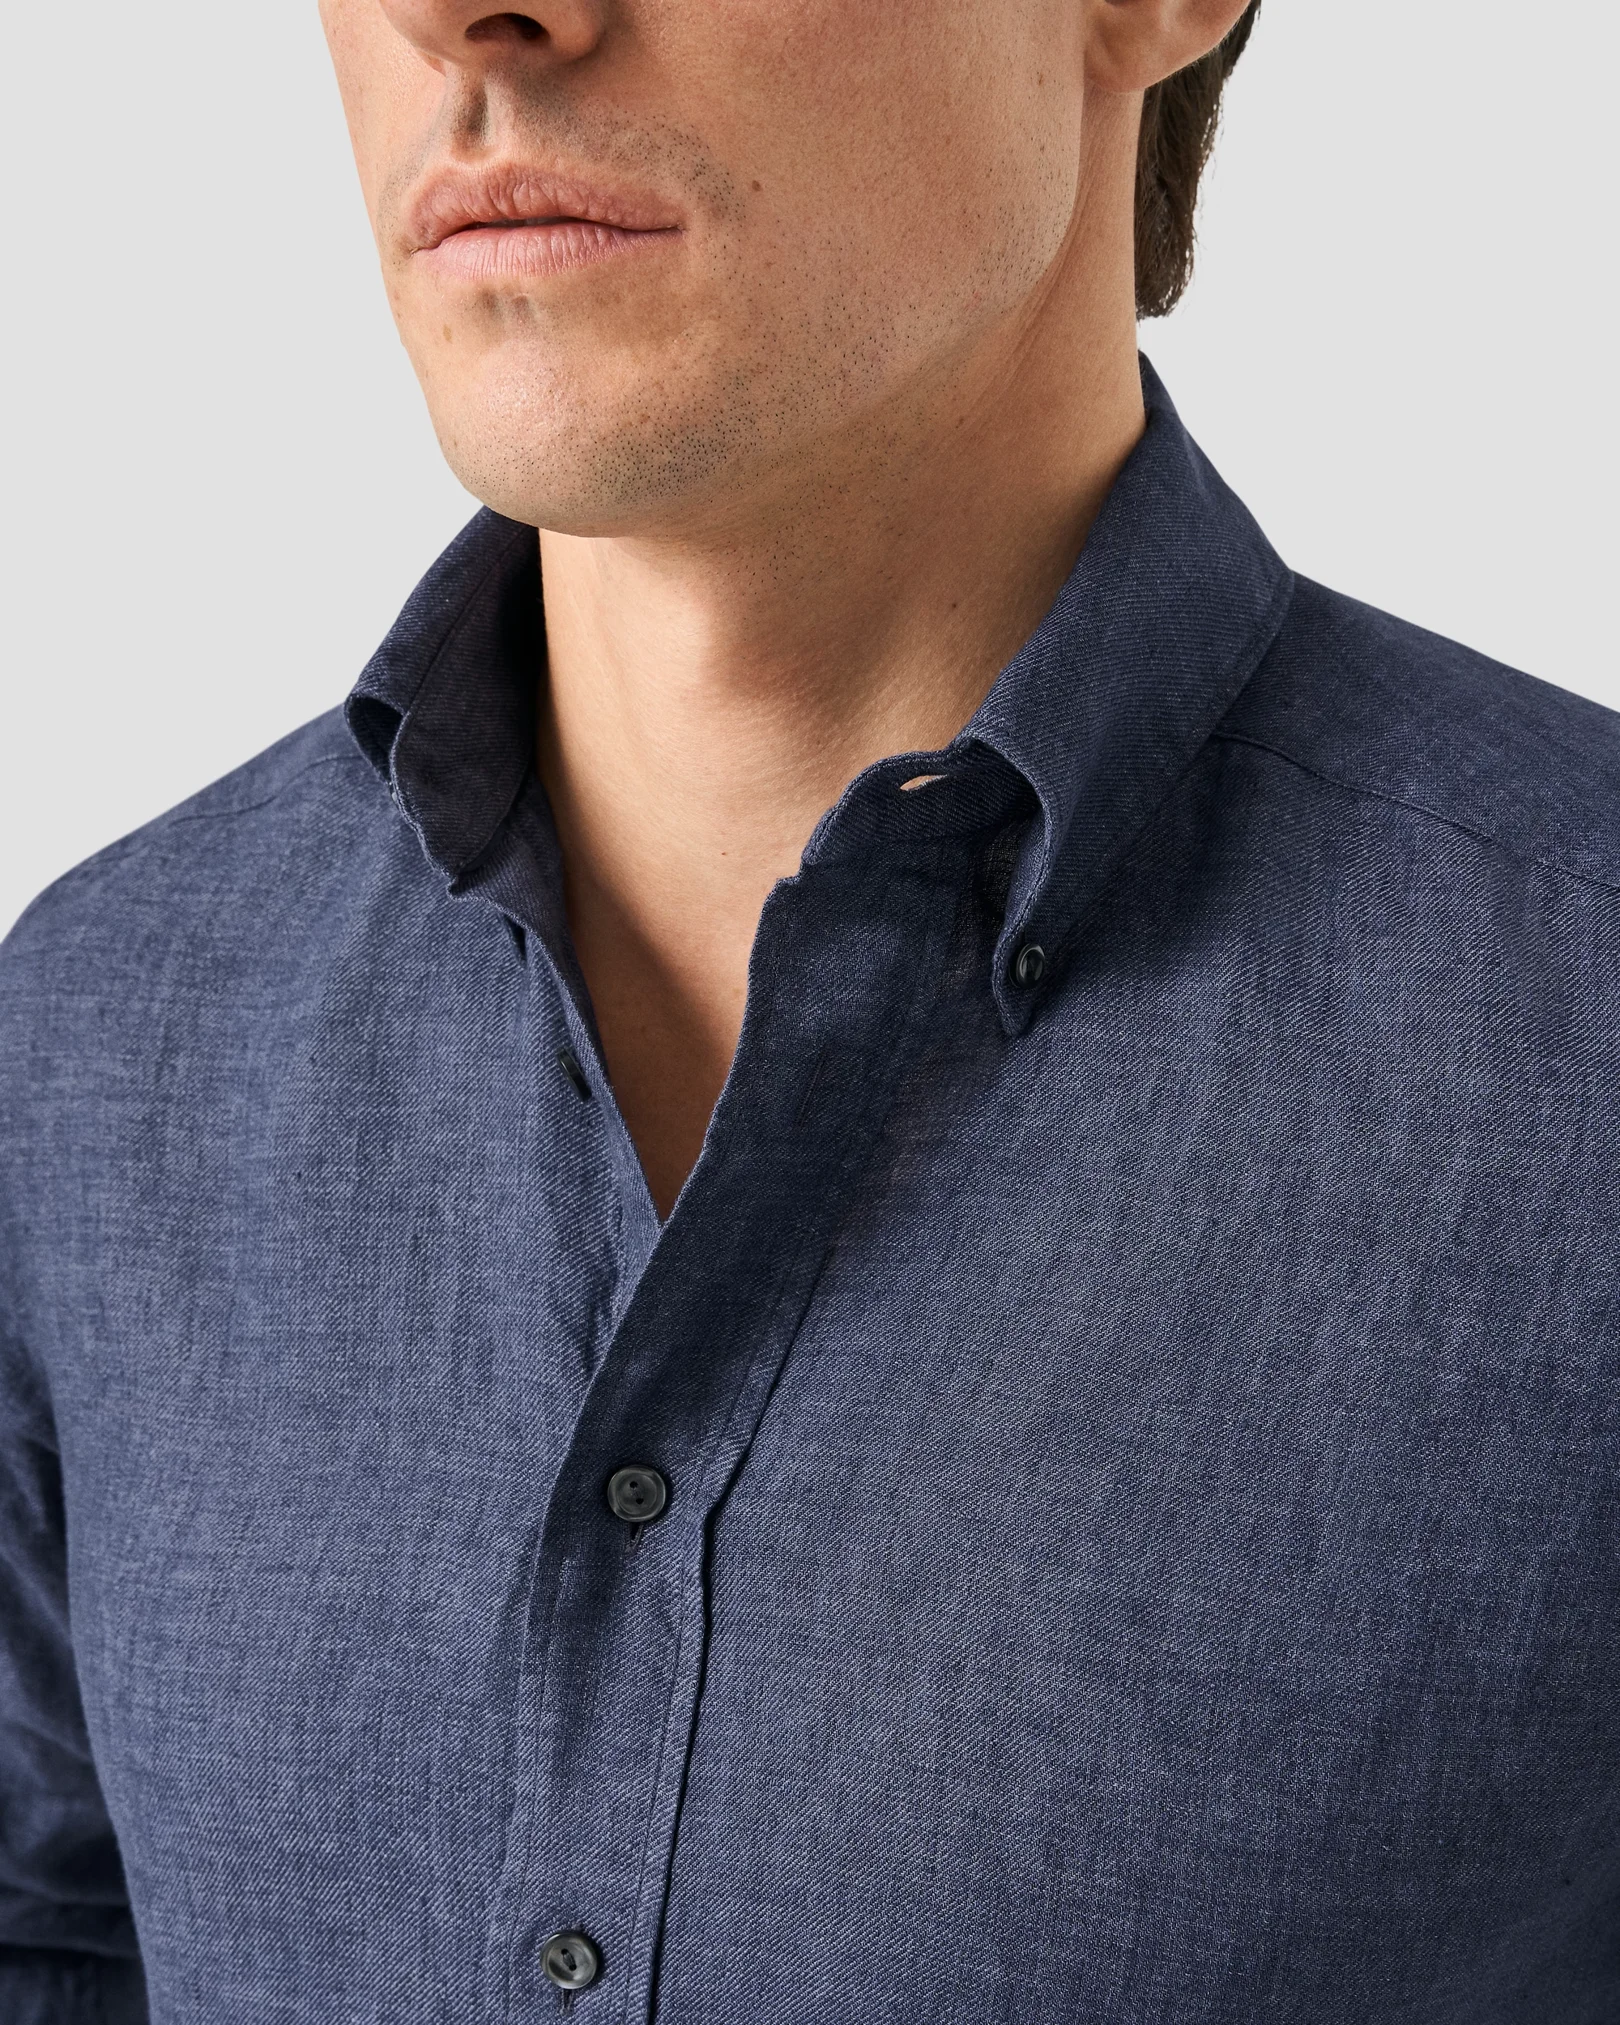 Eton - solid navy linen shirt button down